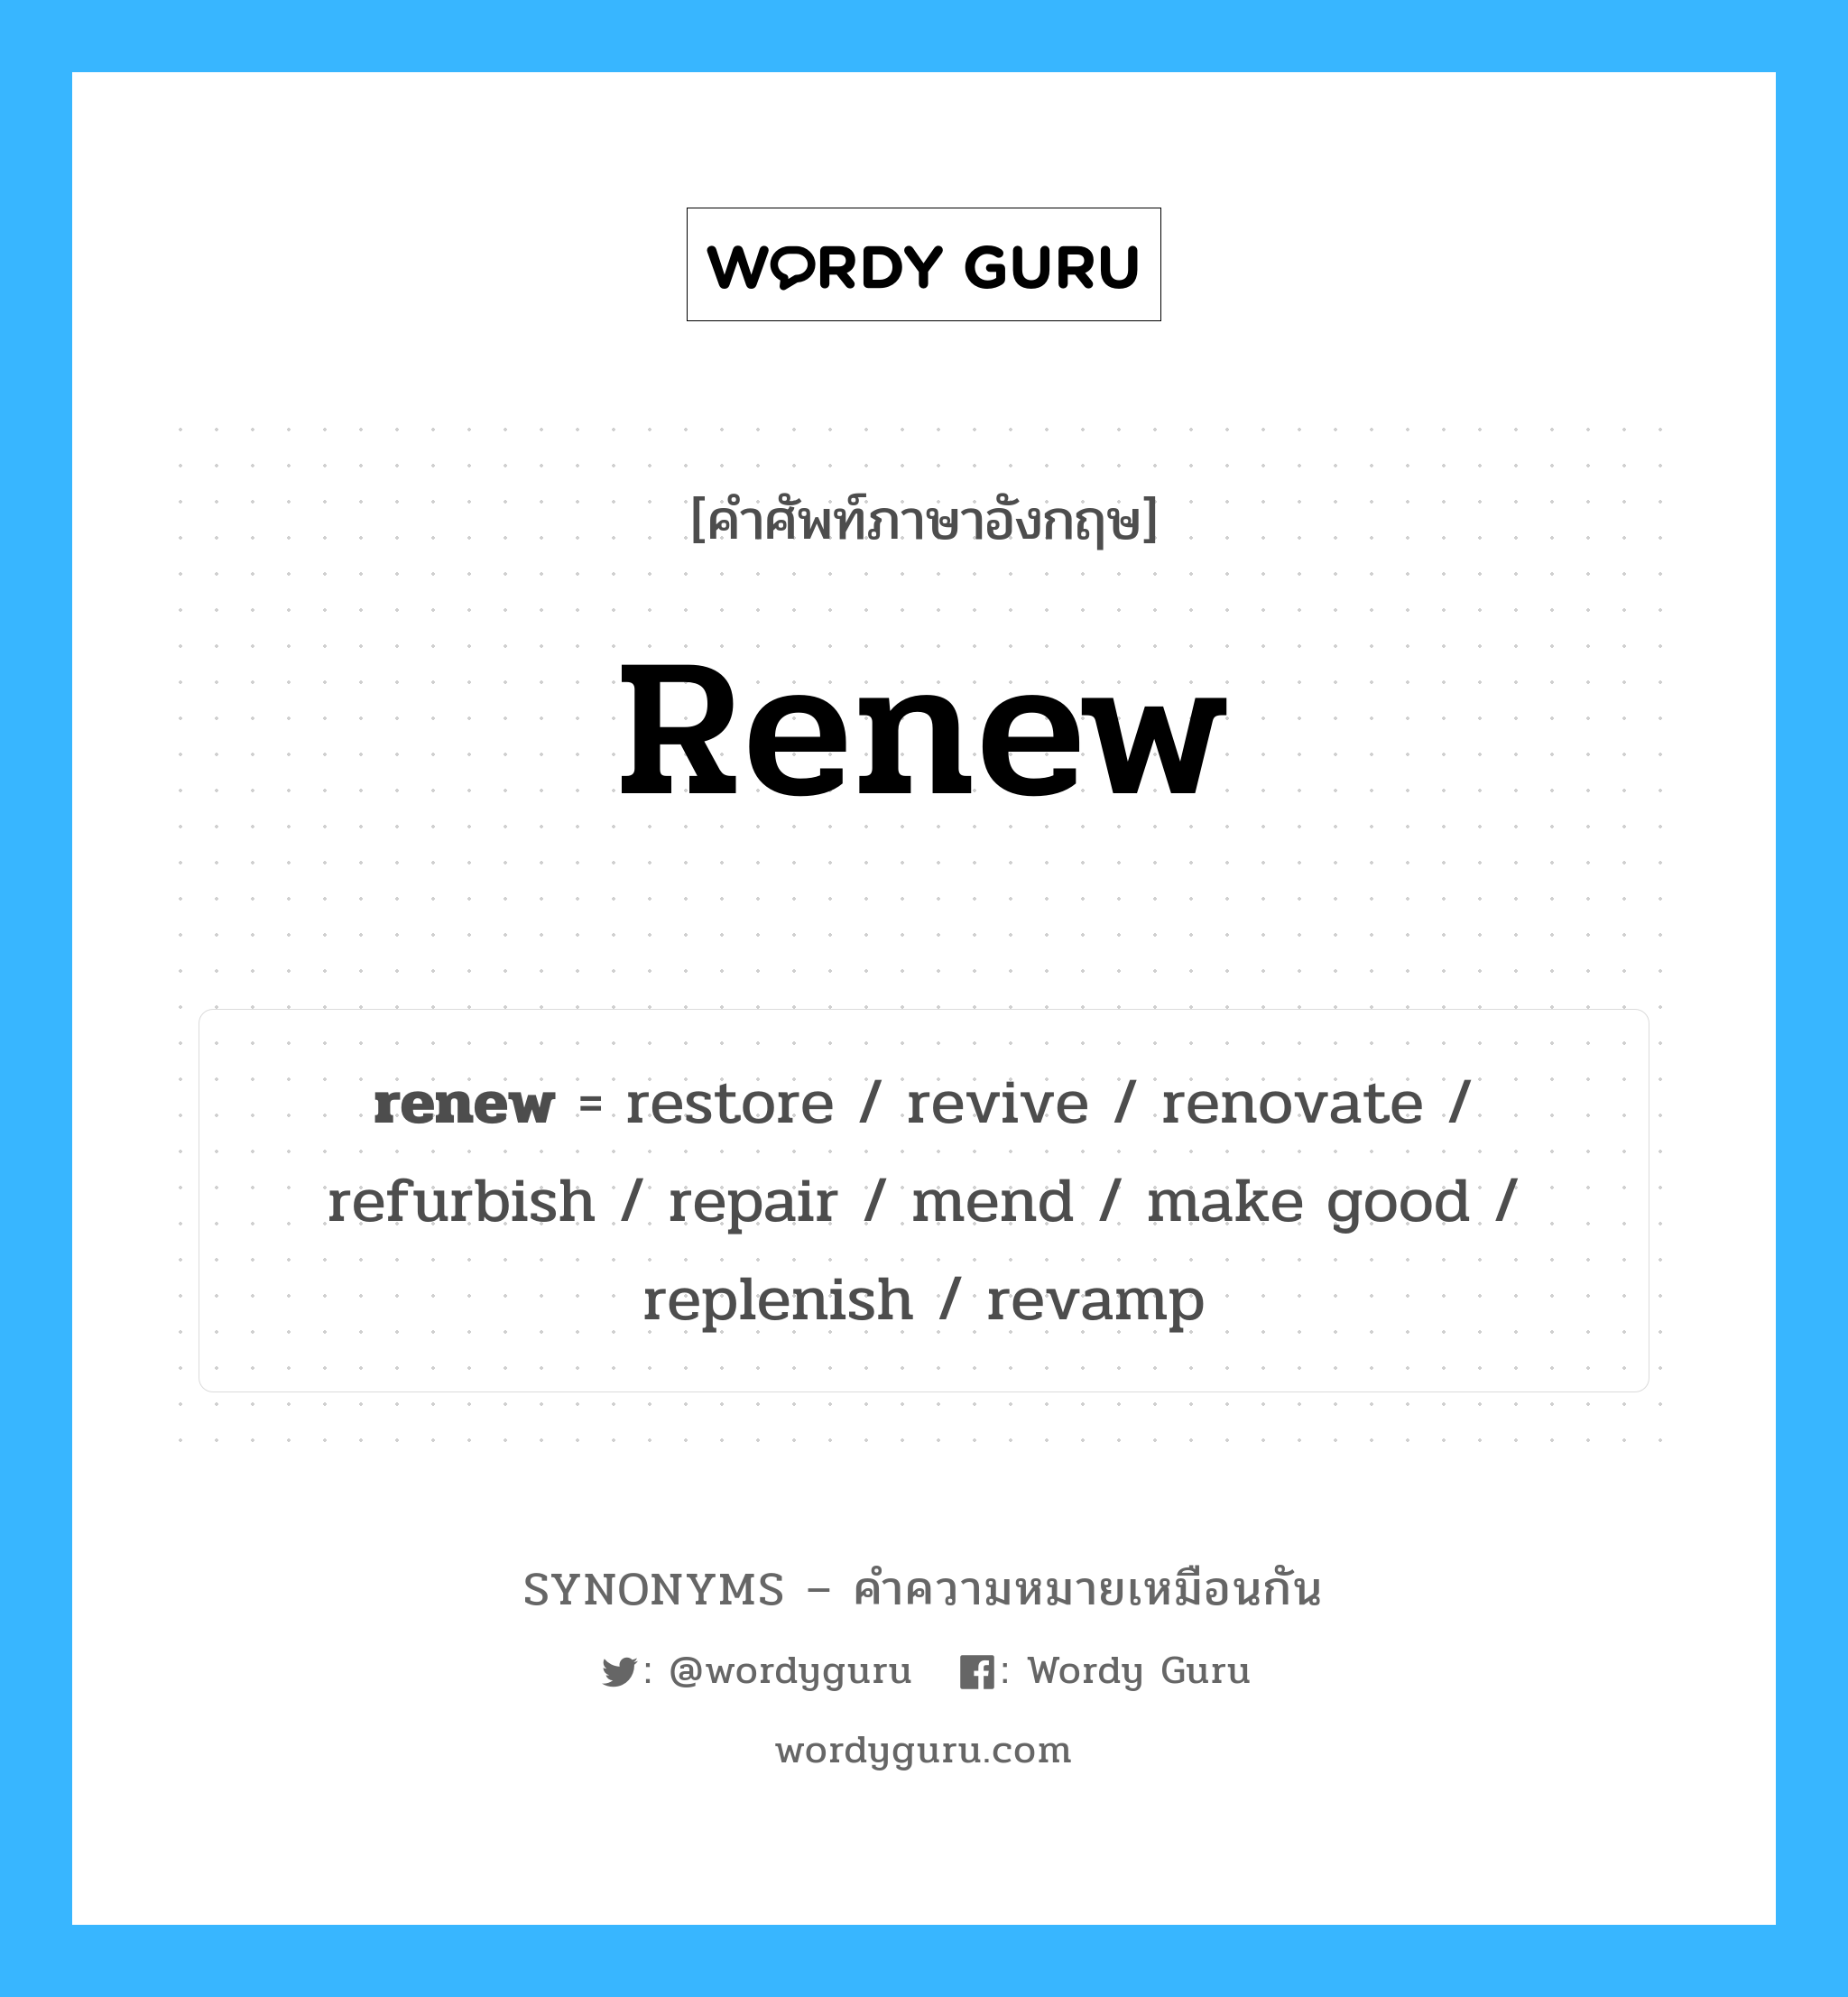 restore เป็นหนึ่งใน mend และมีคำอื่น ๆ อีกดังนี้, คำศัพท์ภาษาอังกฤษ restore ความหมายคล้ายกันกับ renew แปลว่า การคืนค่า หมวด renew